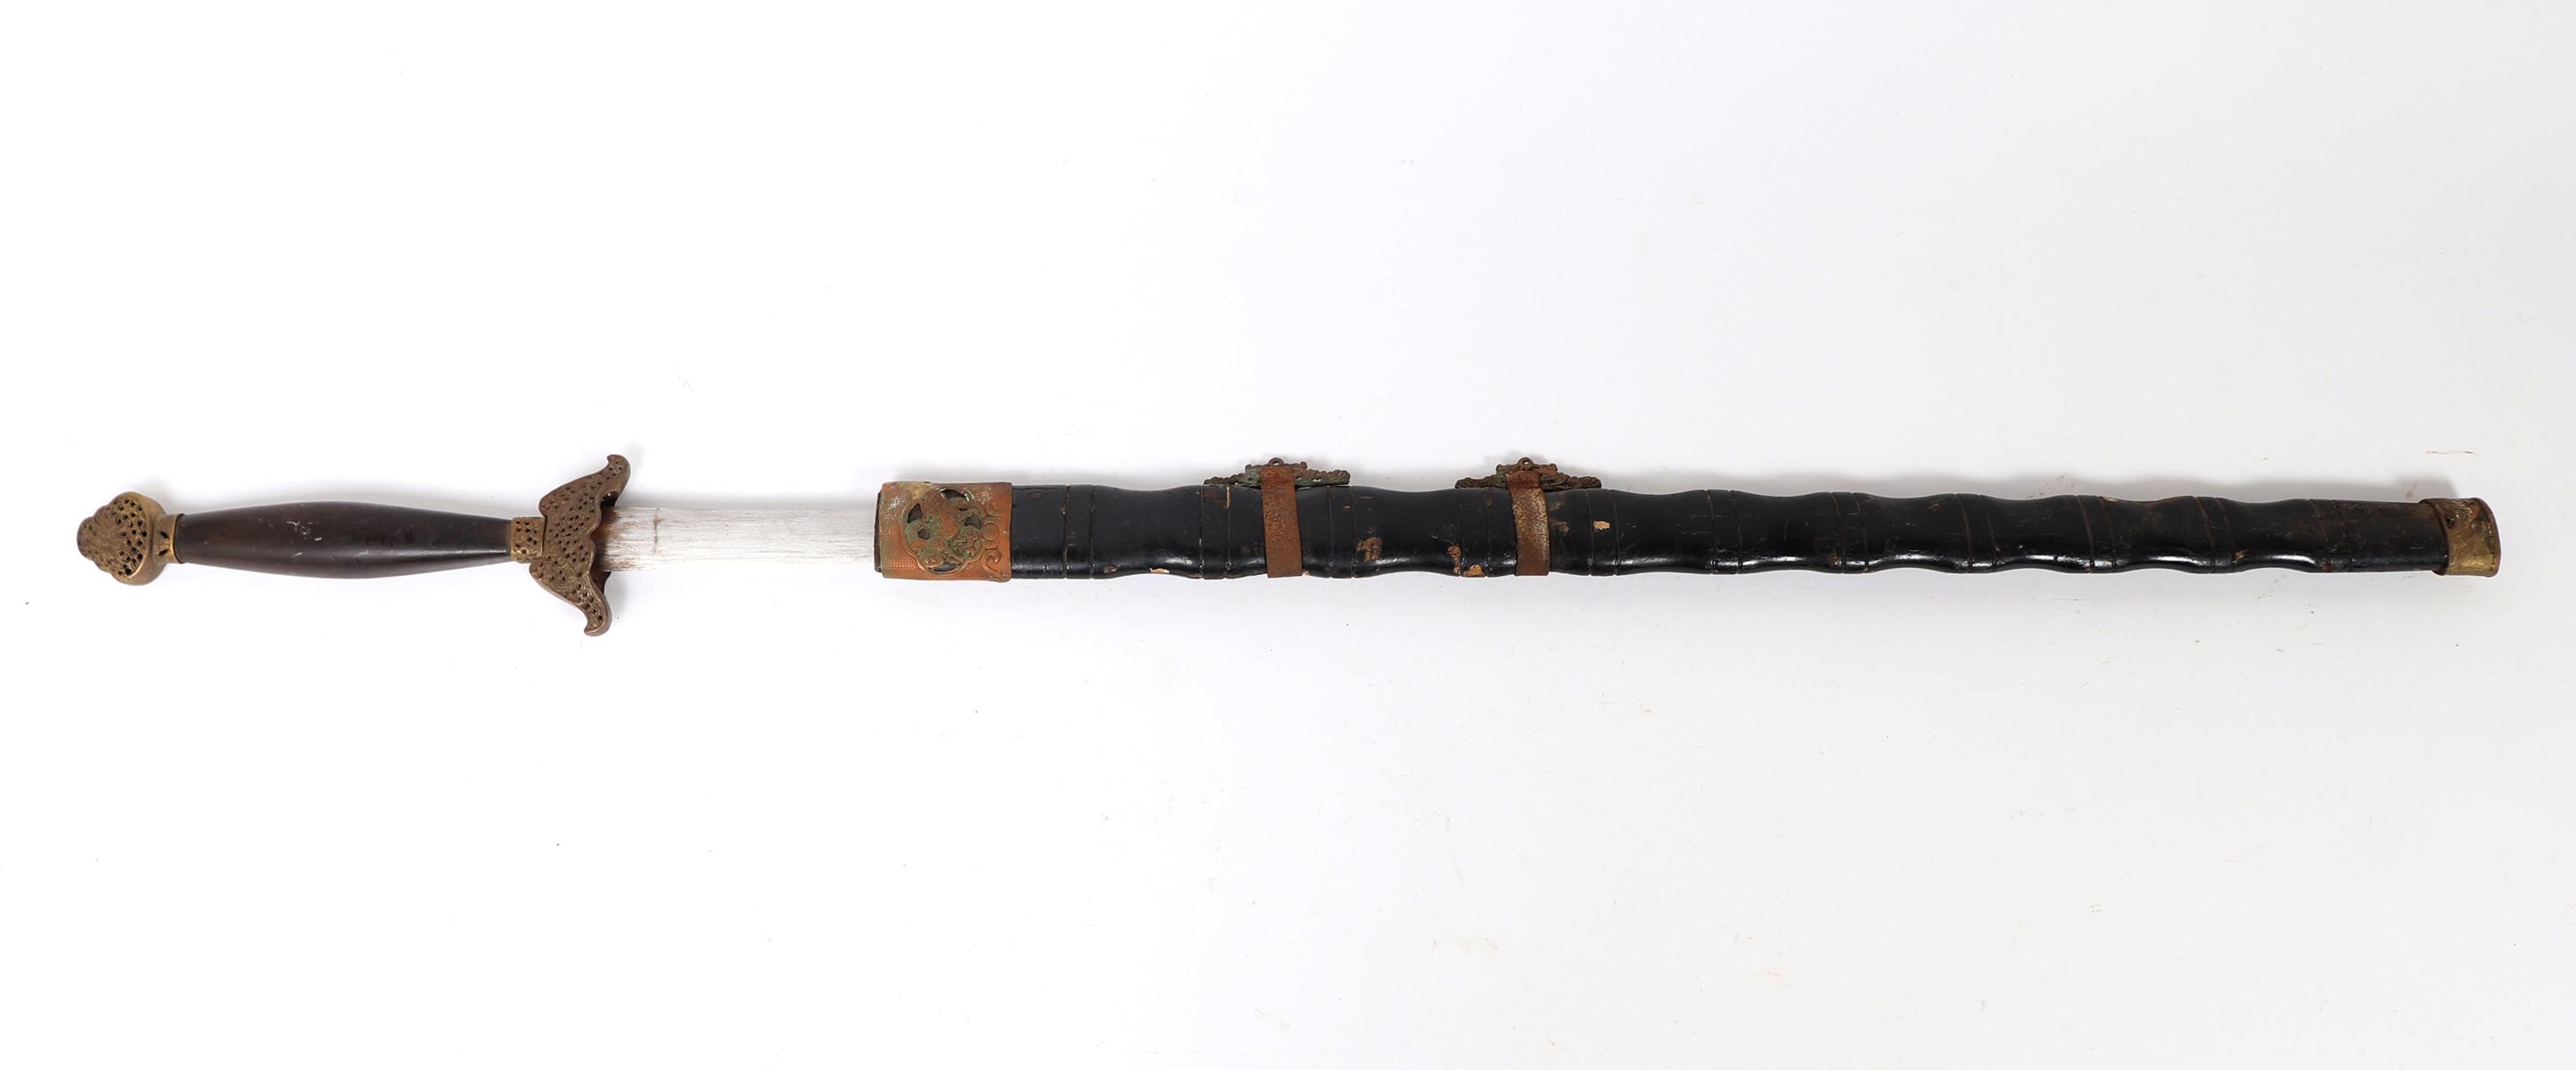 Unusual Chinese Sword